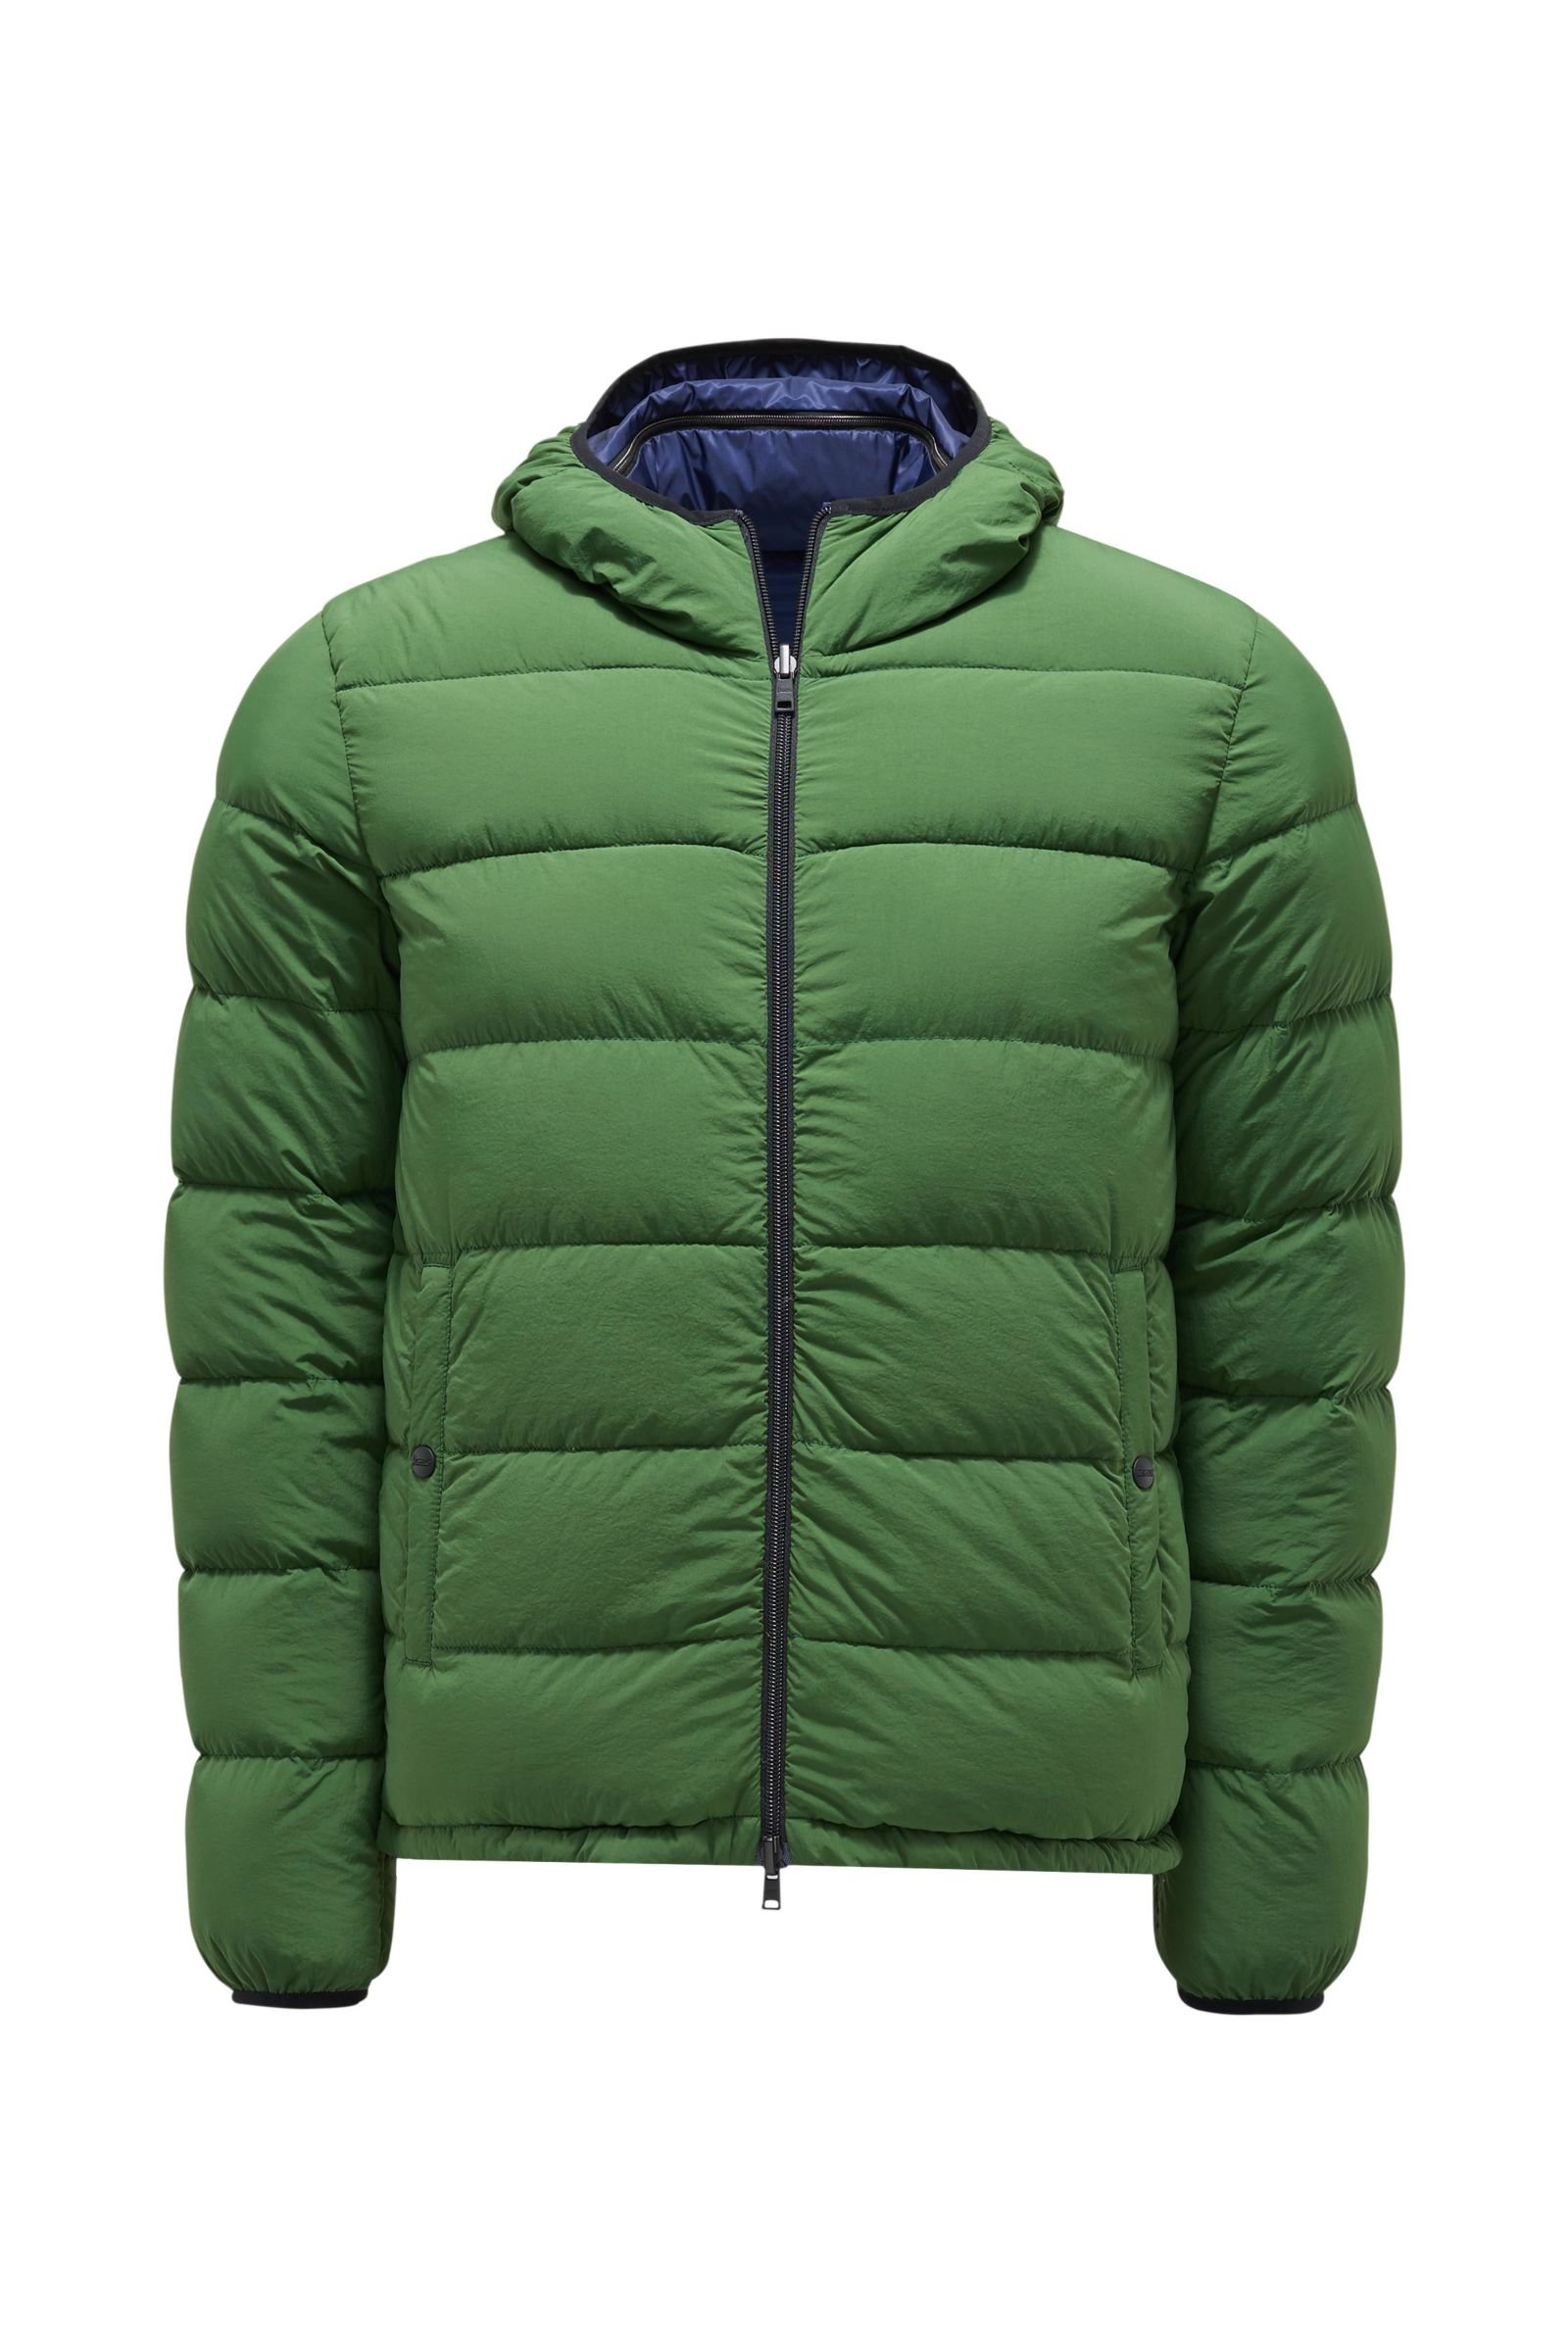 Reversible down jacket green/navy